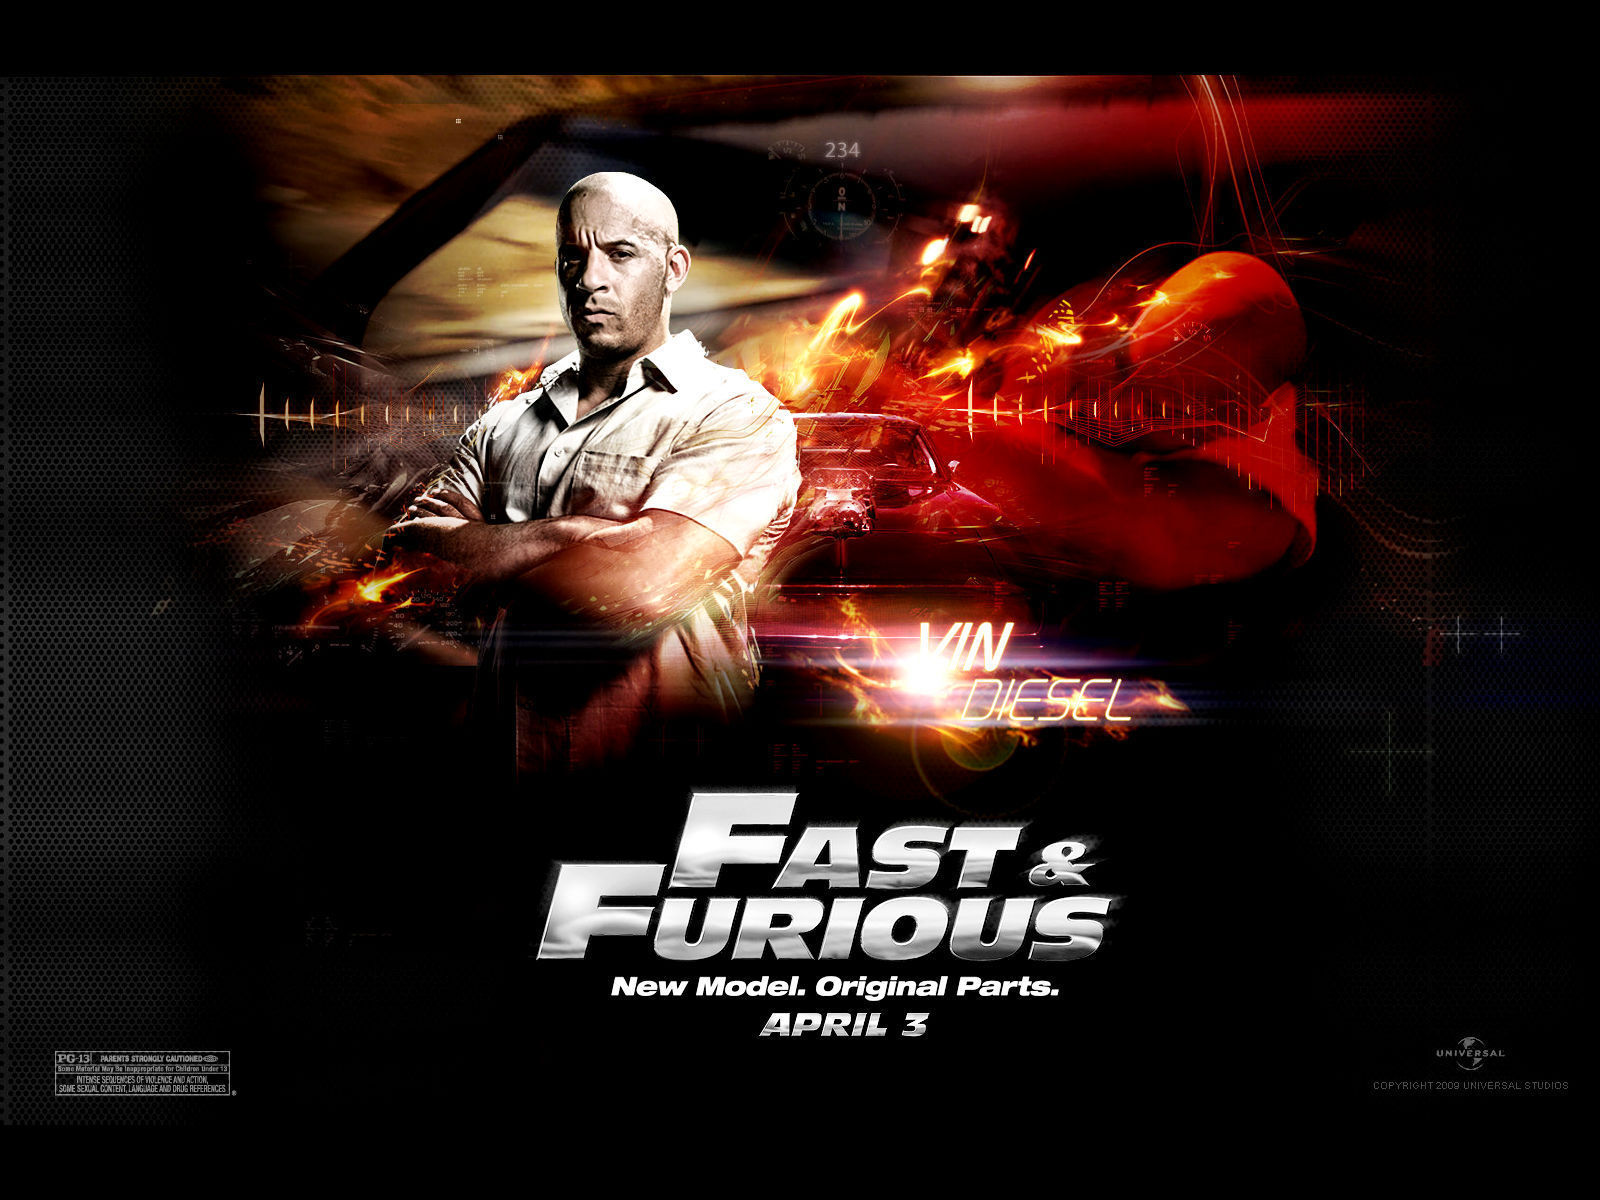 Fast & Furious - Upcoming Movies Wallpaper (5012511) - Fanpop